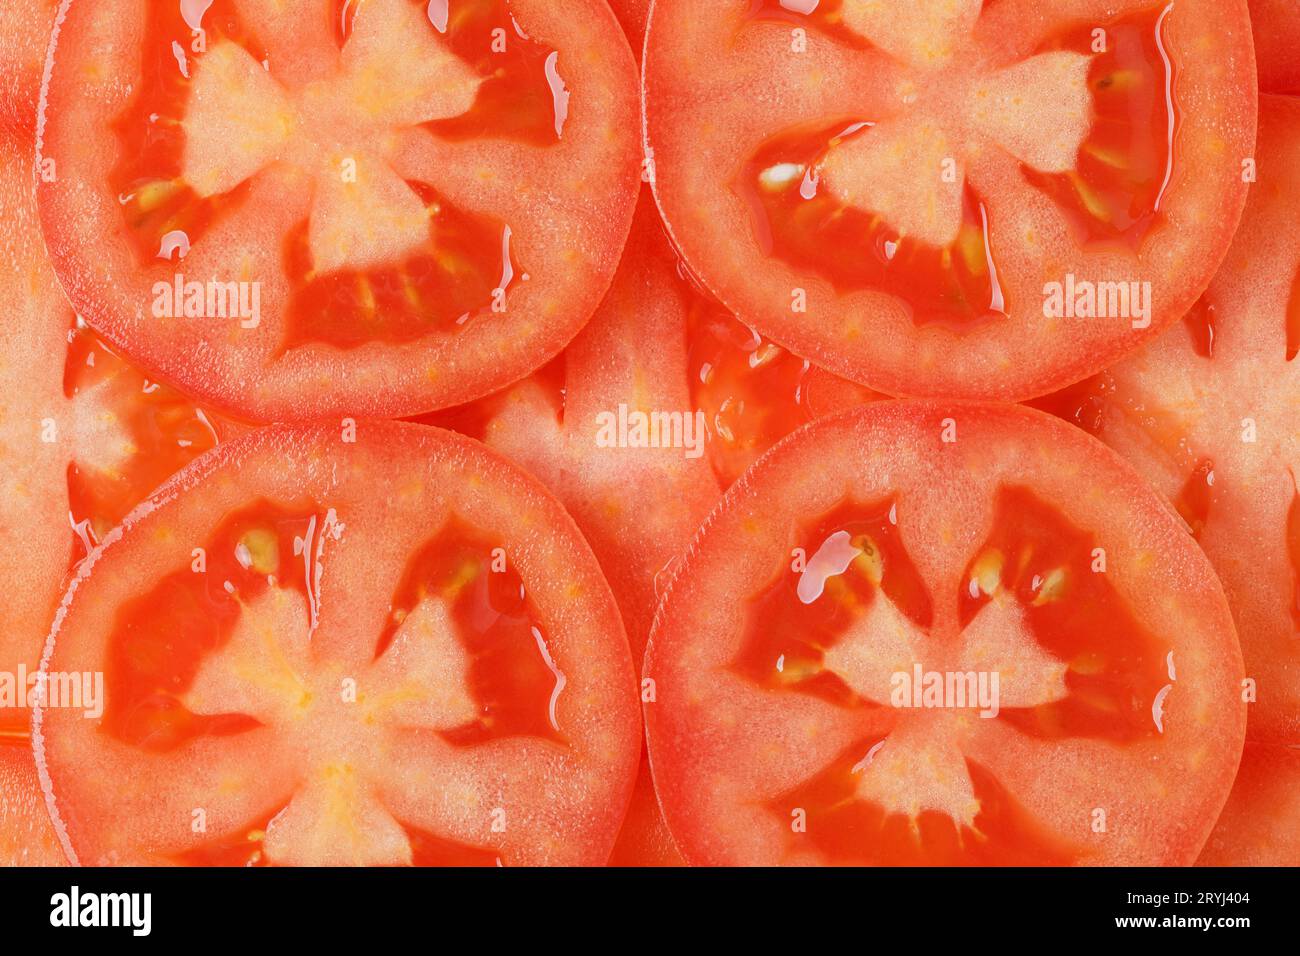 Tomato sliced background. Stock Photo